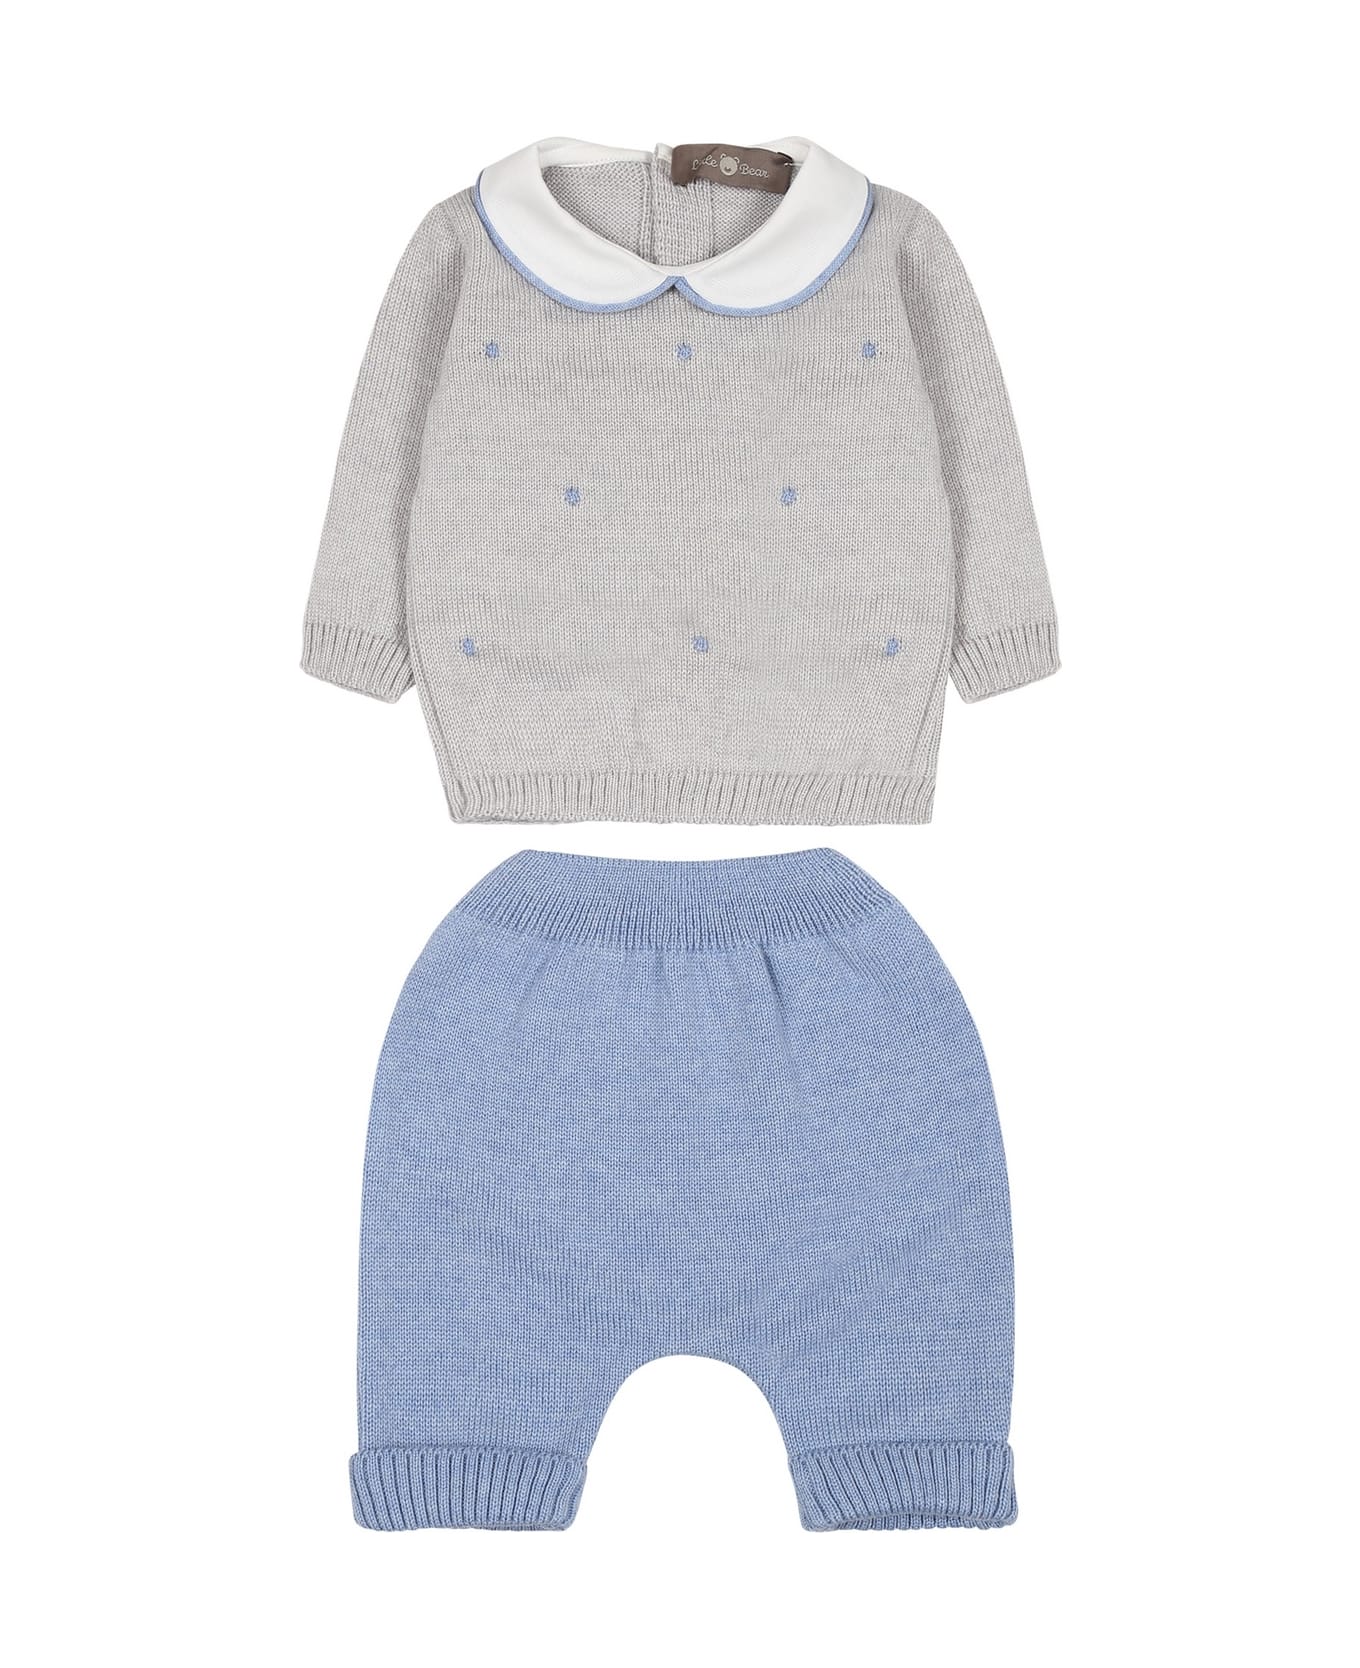 Little Bear Multicolor Suit For Baby Boy - Multicolor